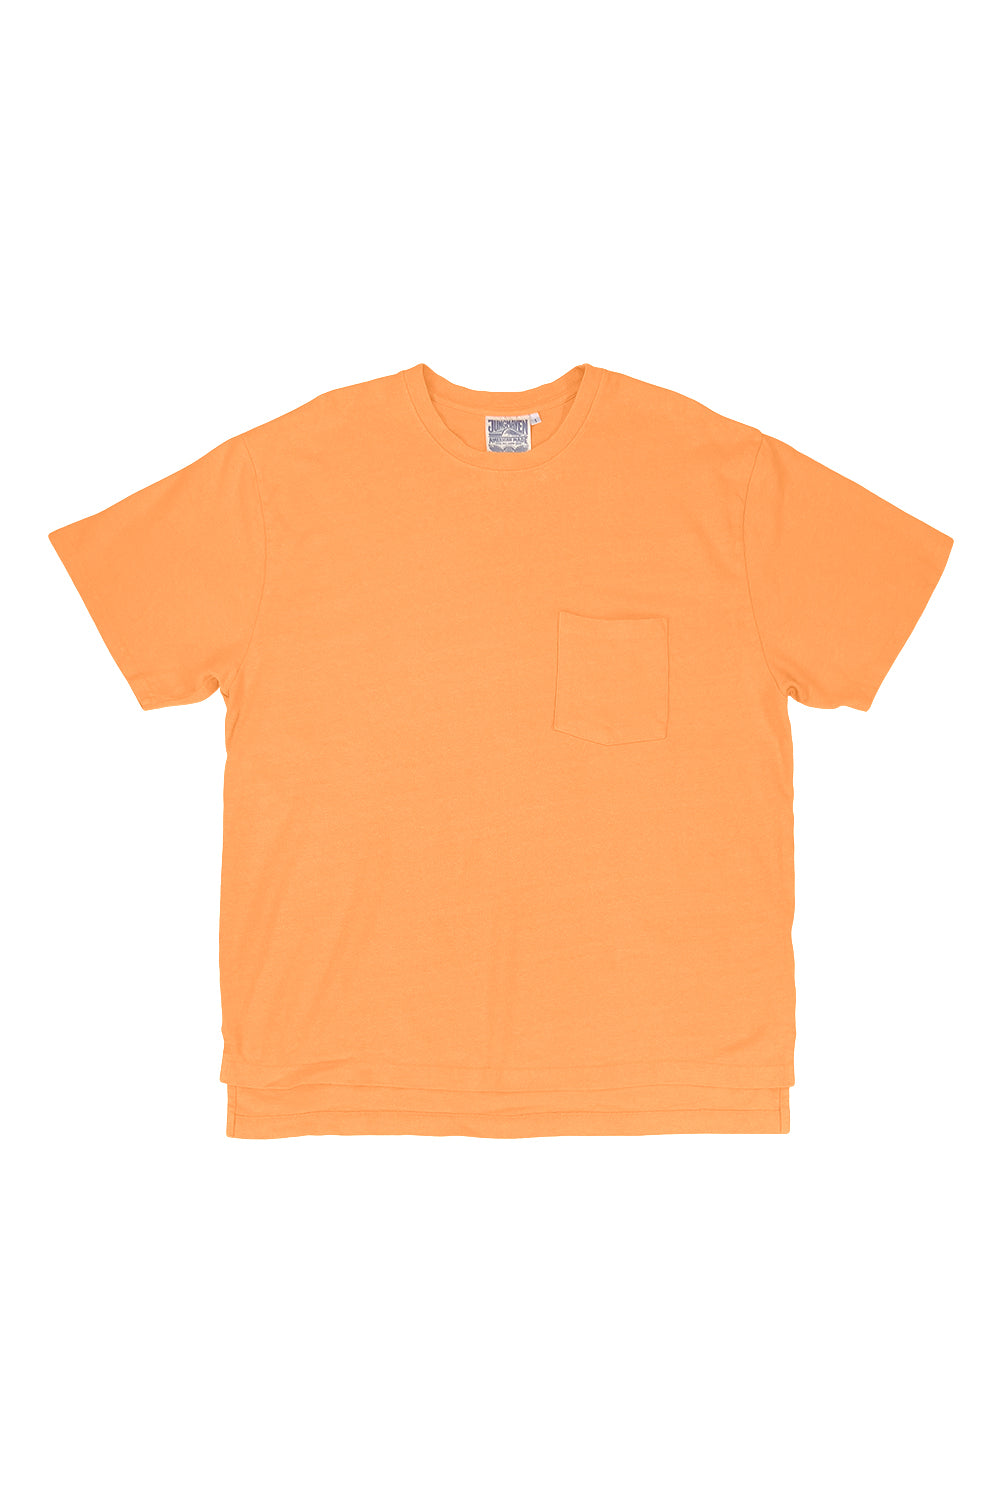 Big Tee | Jungmaven Hemp Clothing & Accessories / Color: Apricot Crush